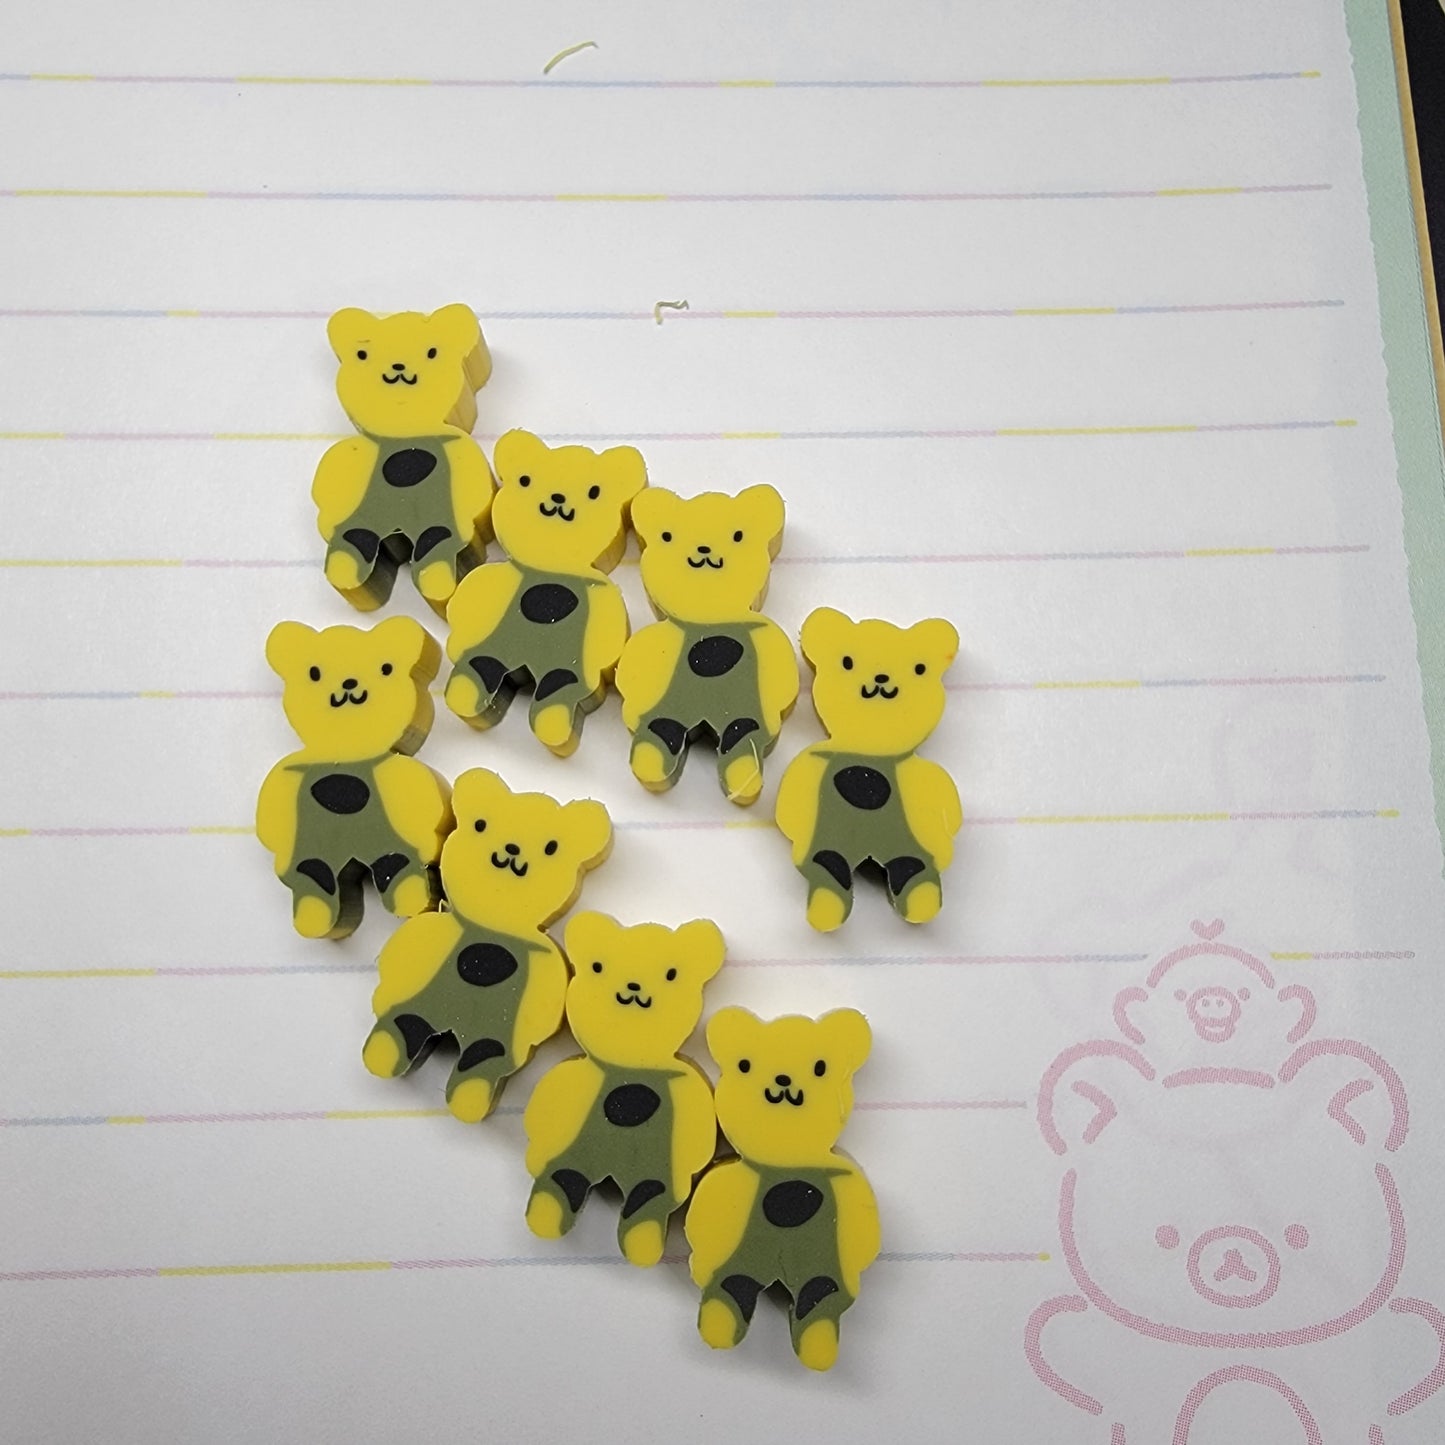 Animal Shaped Mini Eraser Sets